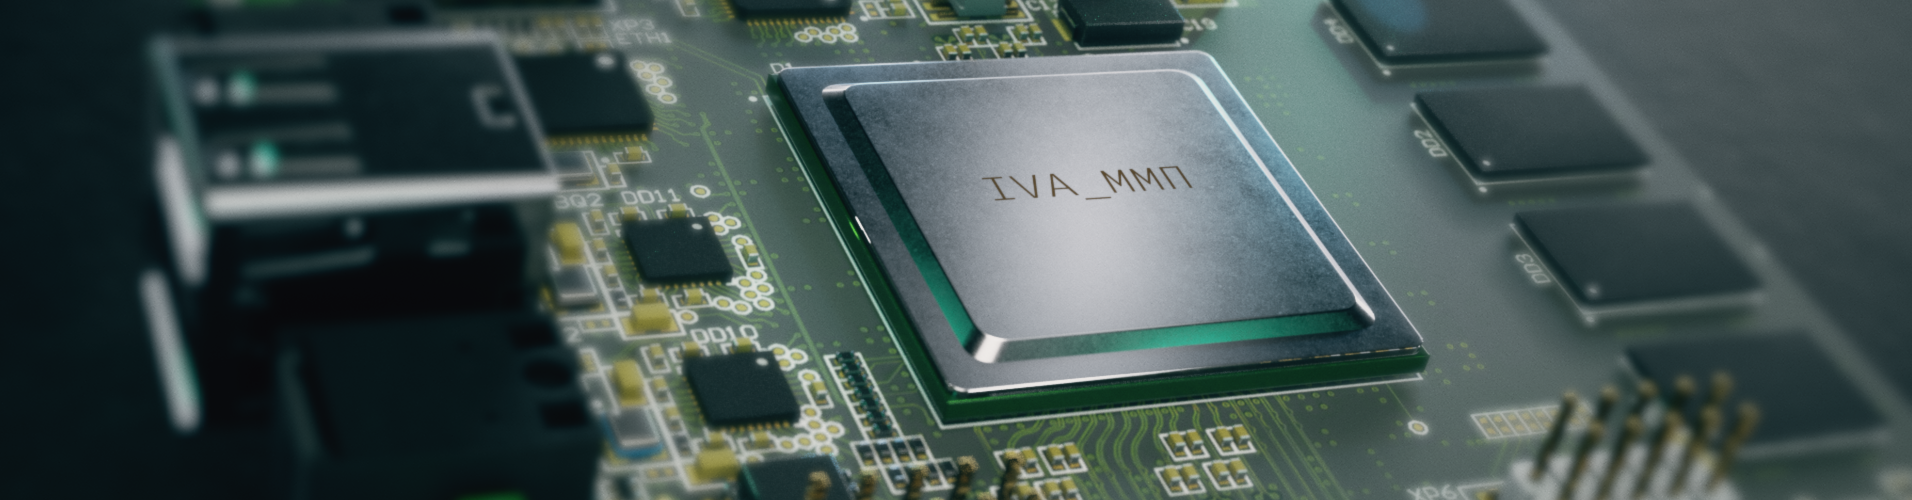 IVA microprocessor